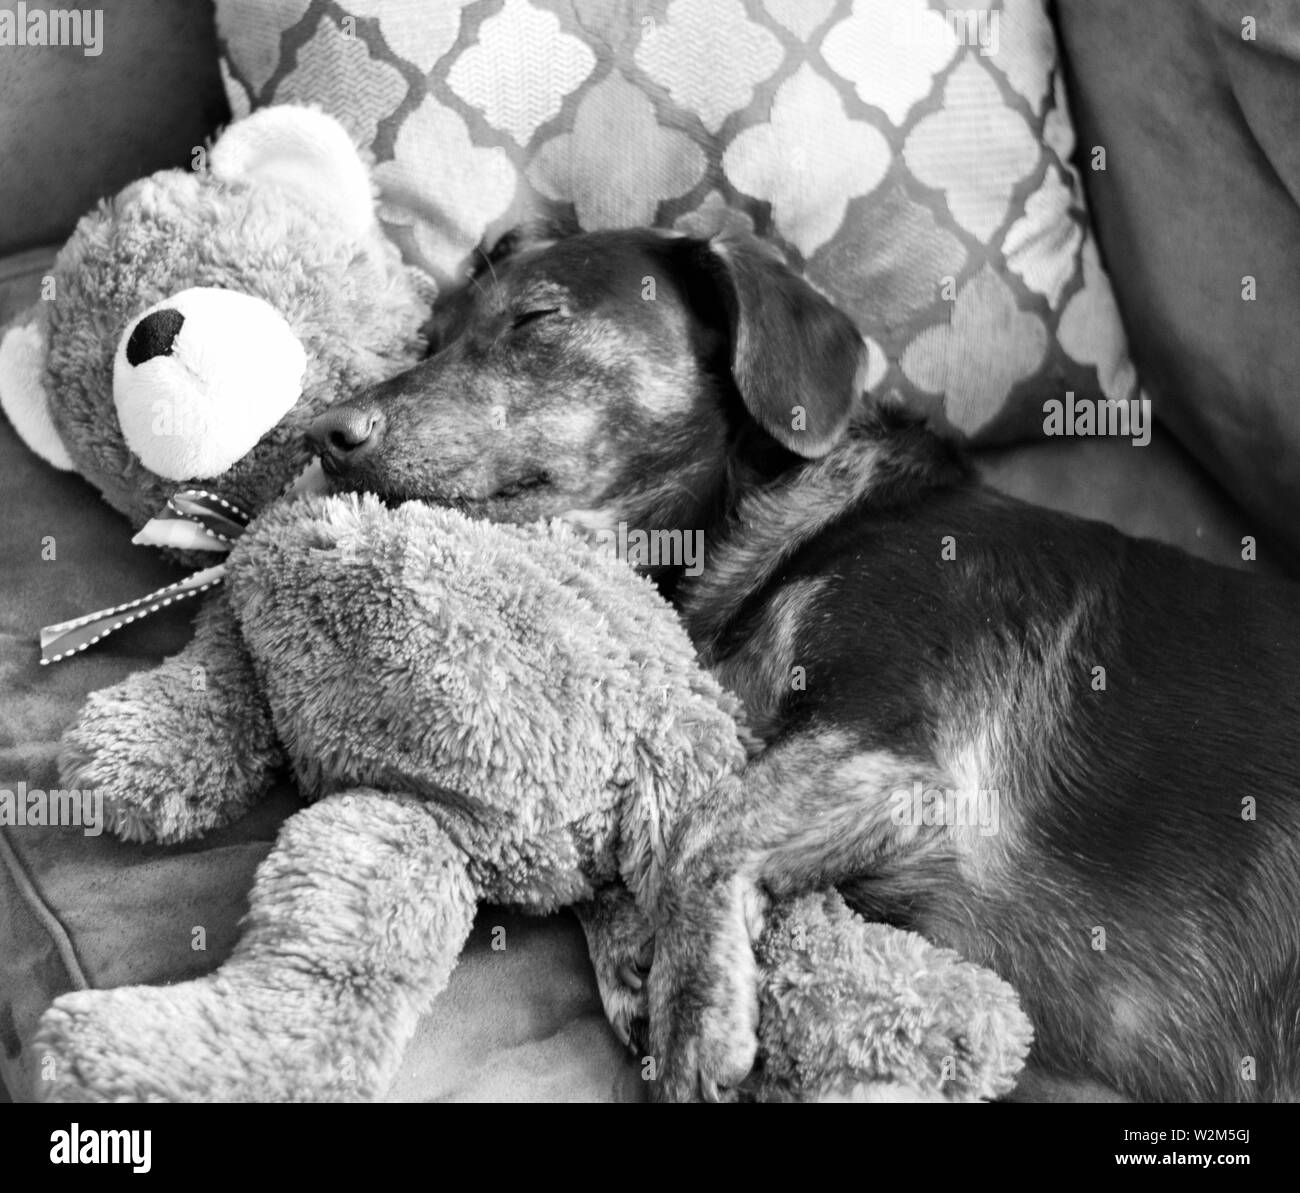 dachshund cuddling with teddy bear on couch Stock Photo